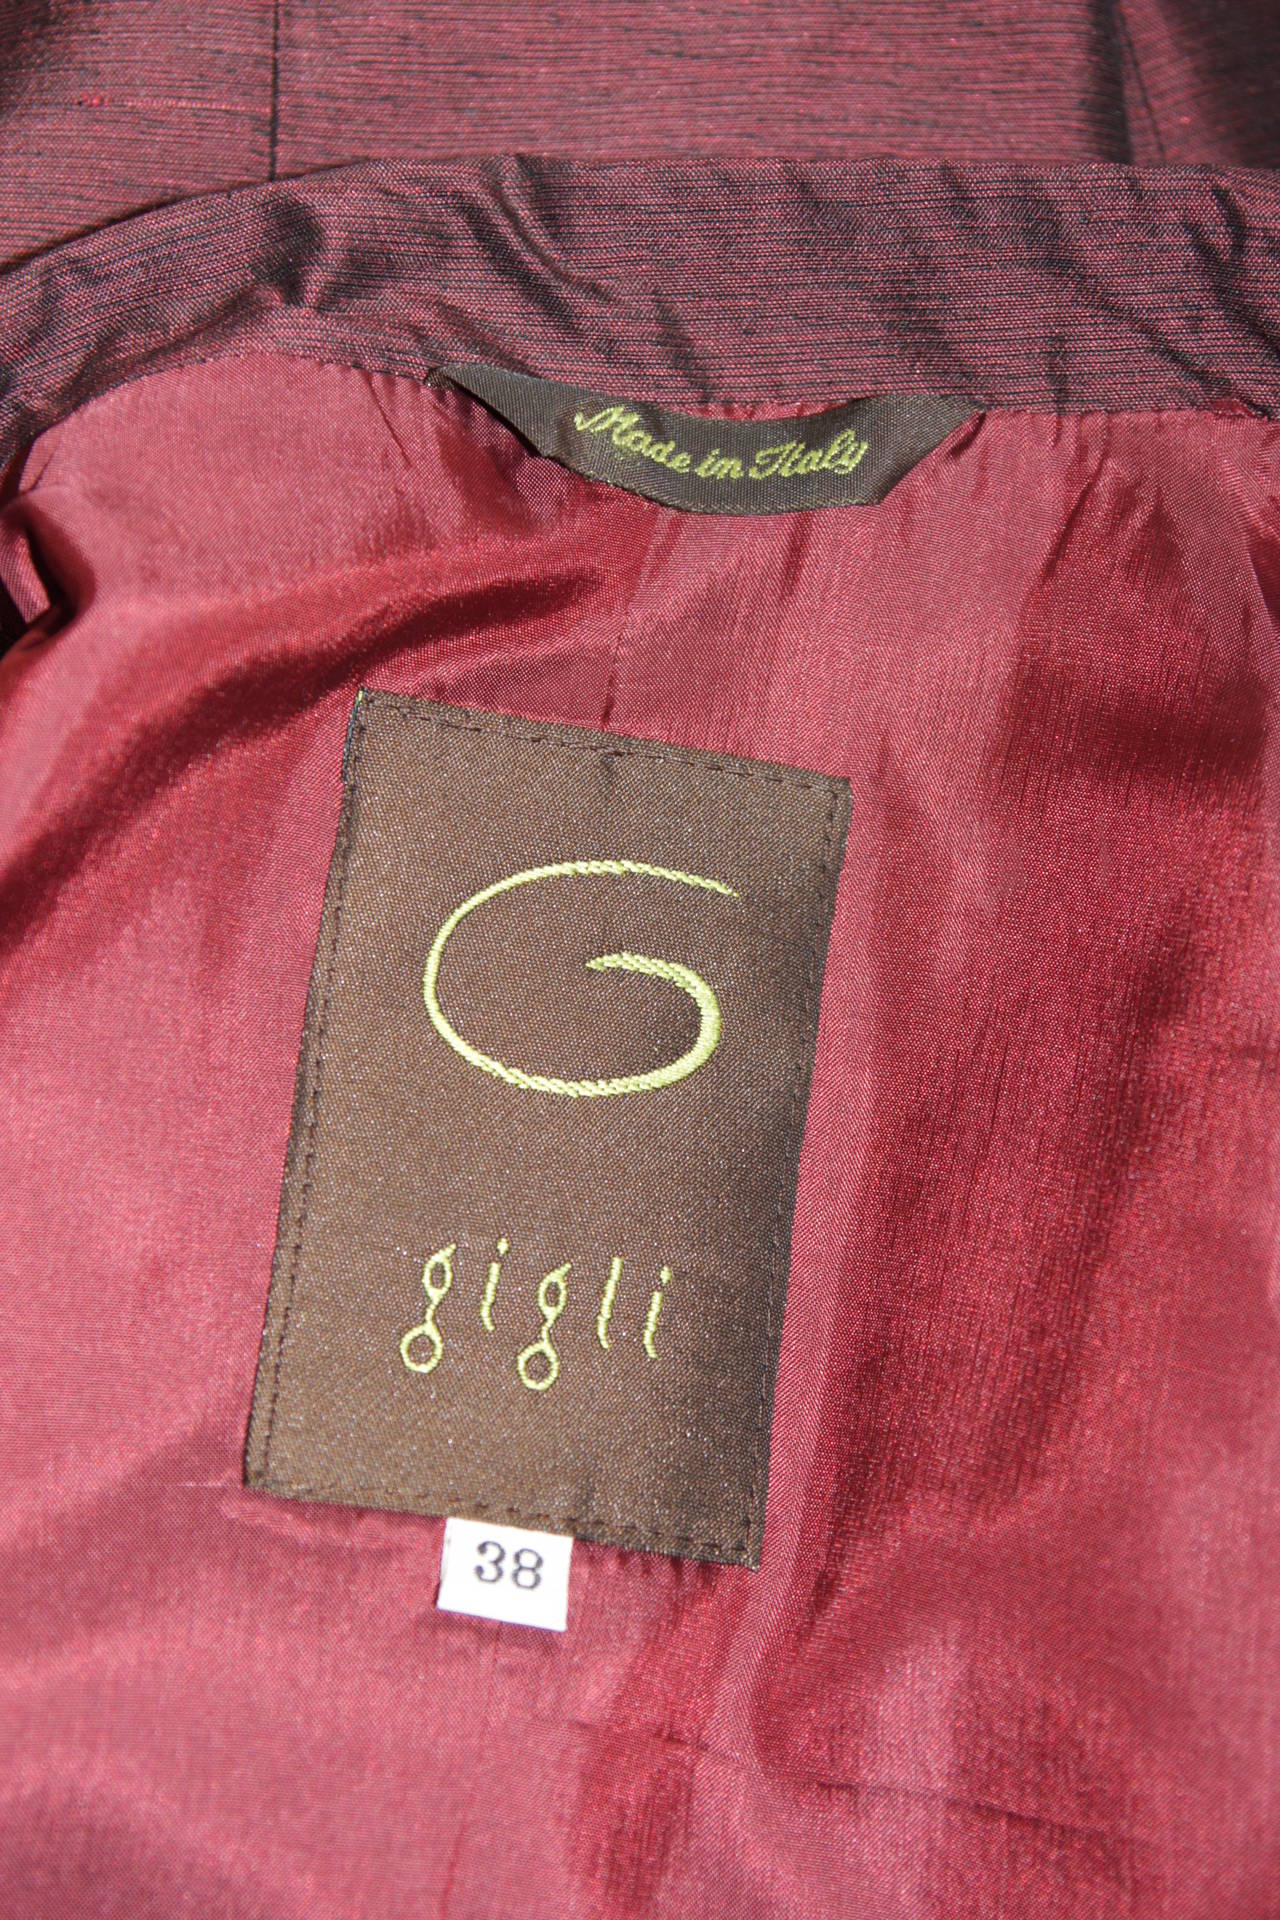 Romeo G Gigli Iridescent Burgundy Three button Evening Jacket size 38 6